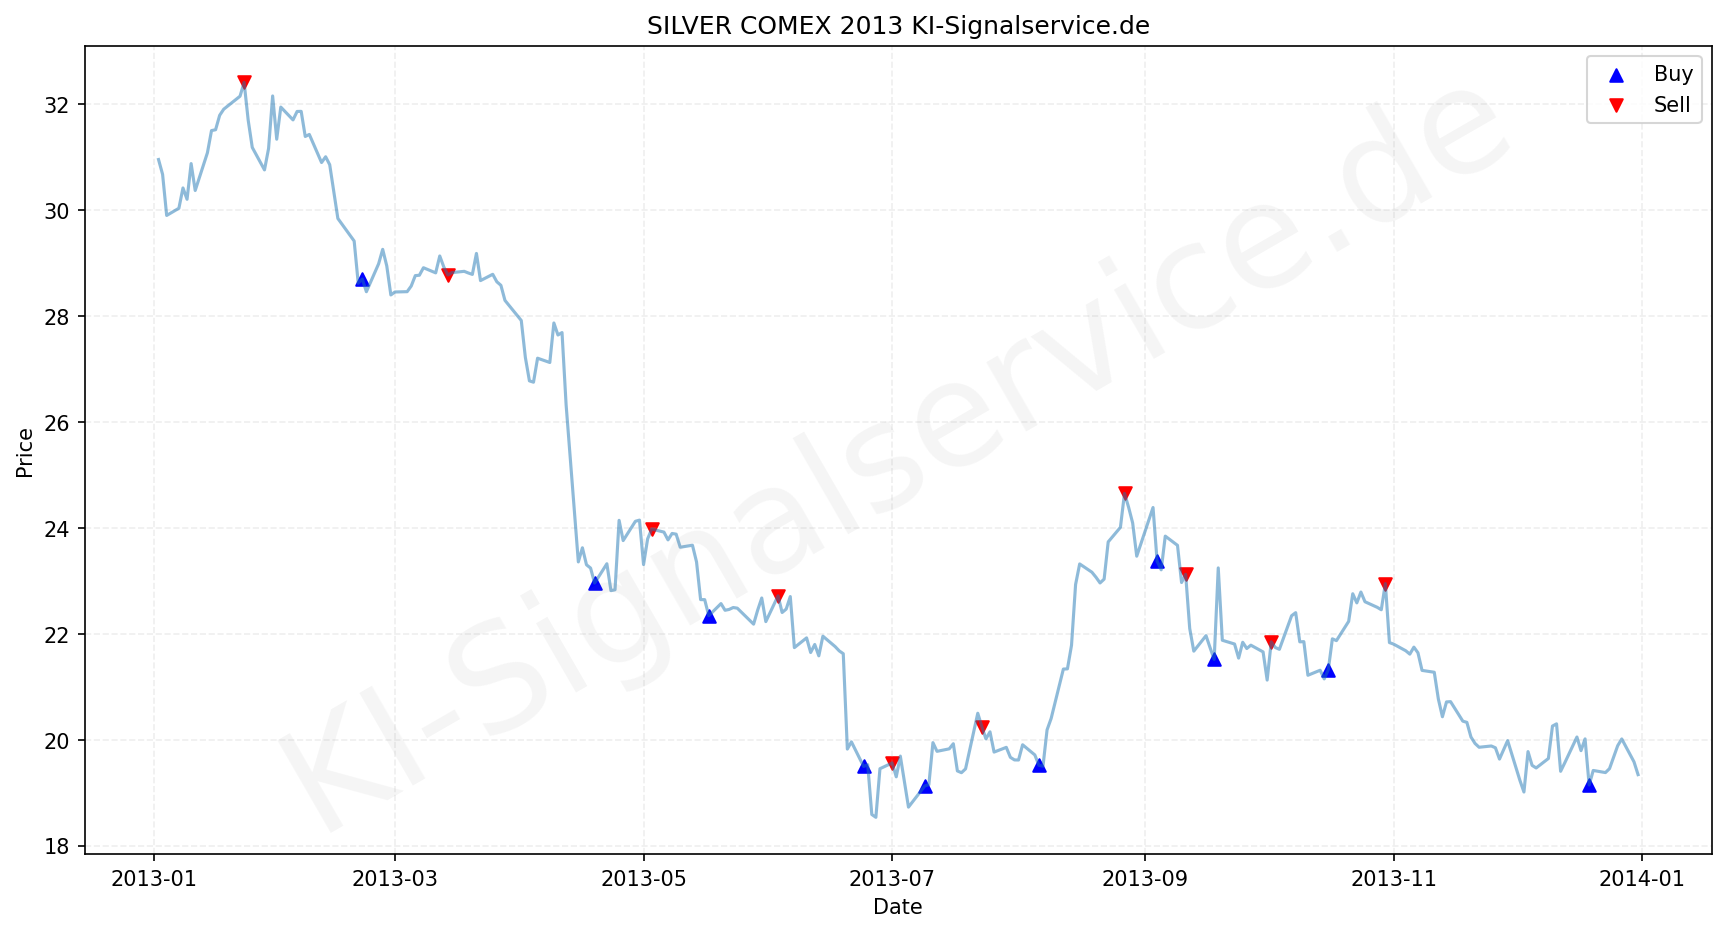 Silver Chart - KI Tradingsignale 2013